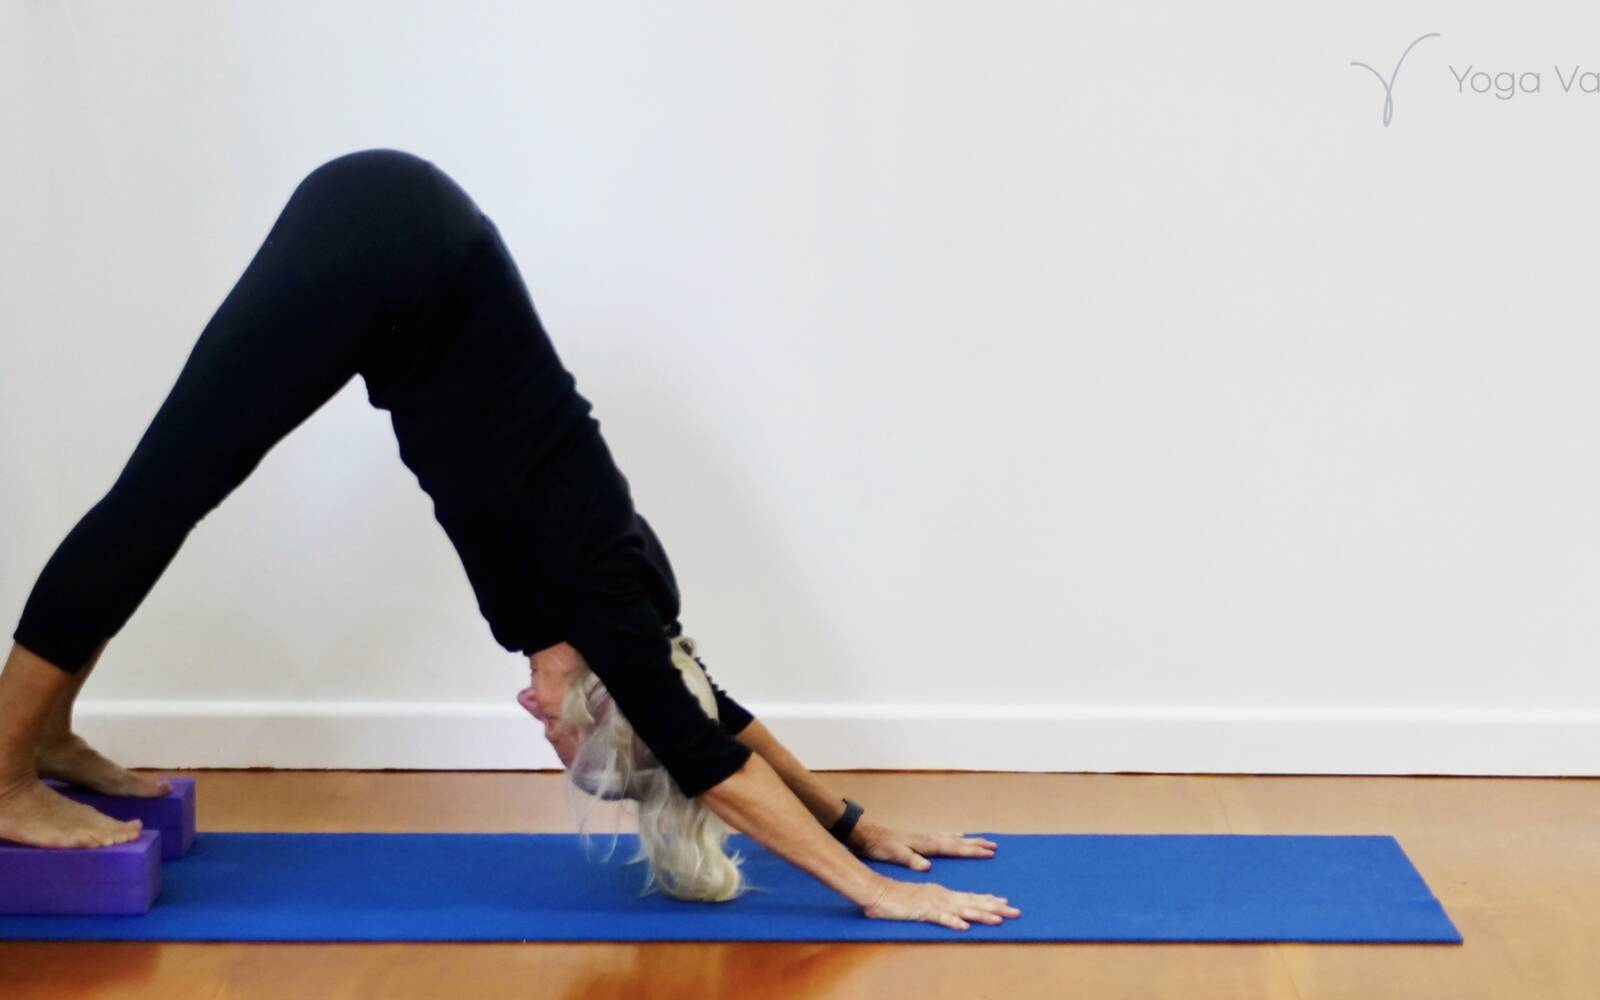 Yoga for Hips Sequence | Jason Crandell Vinyasa Yoga Method